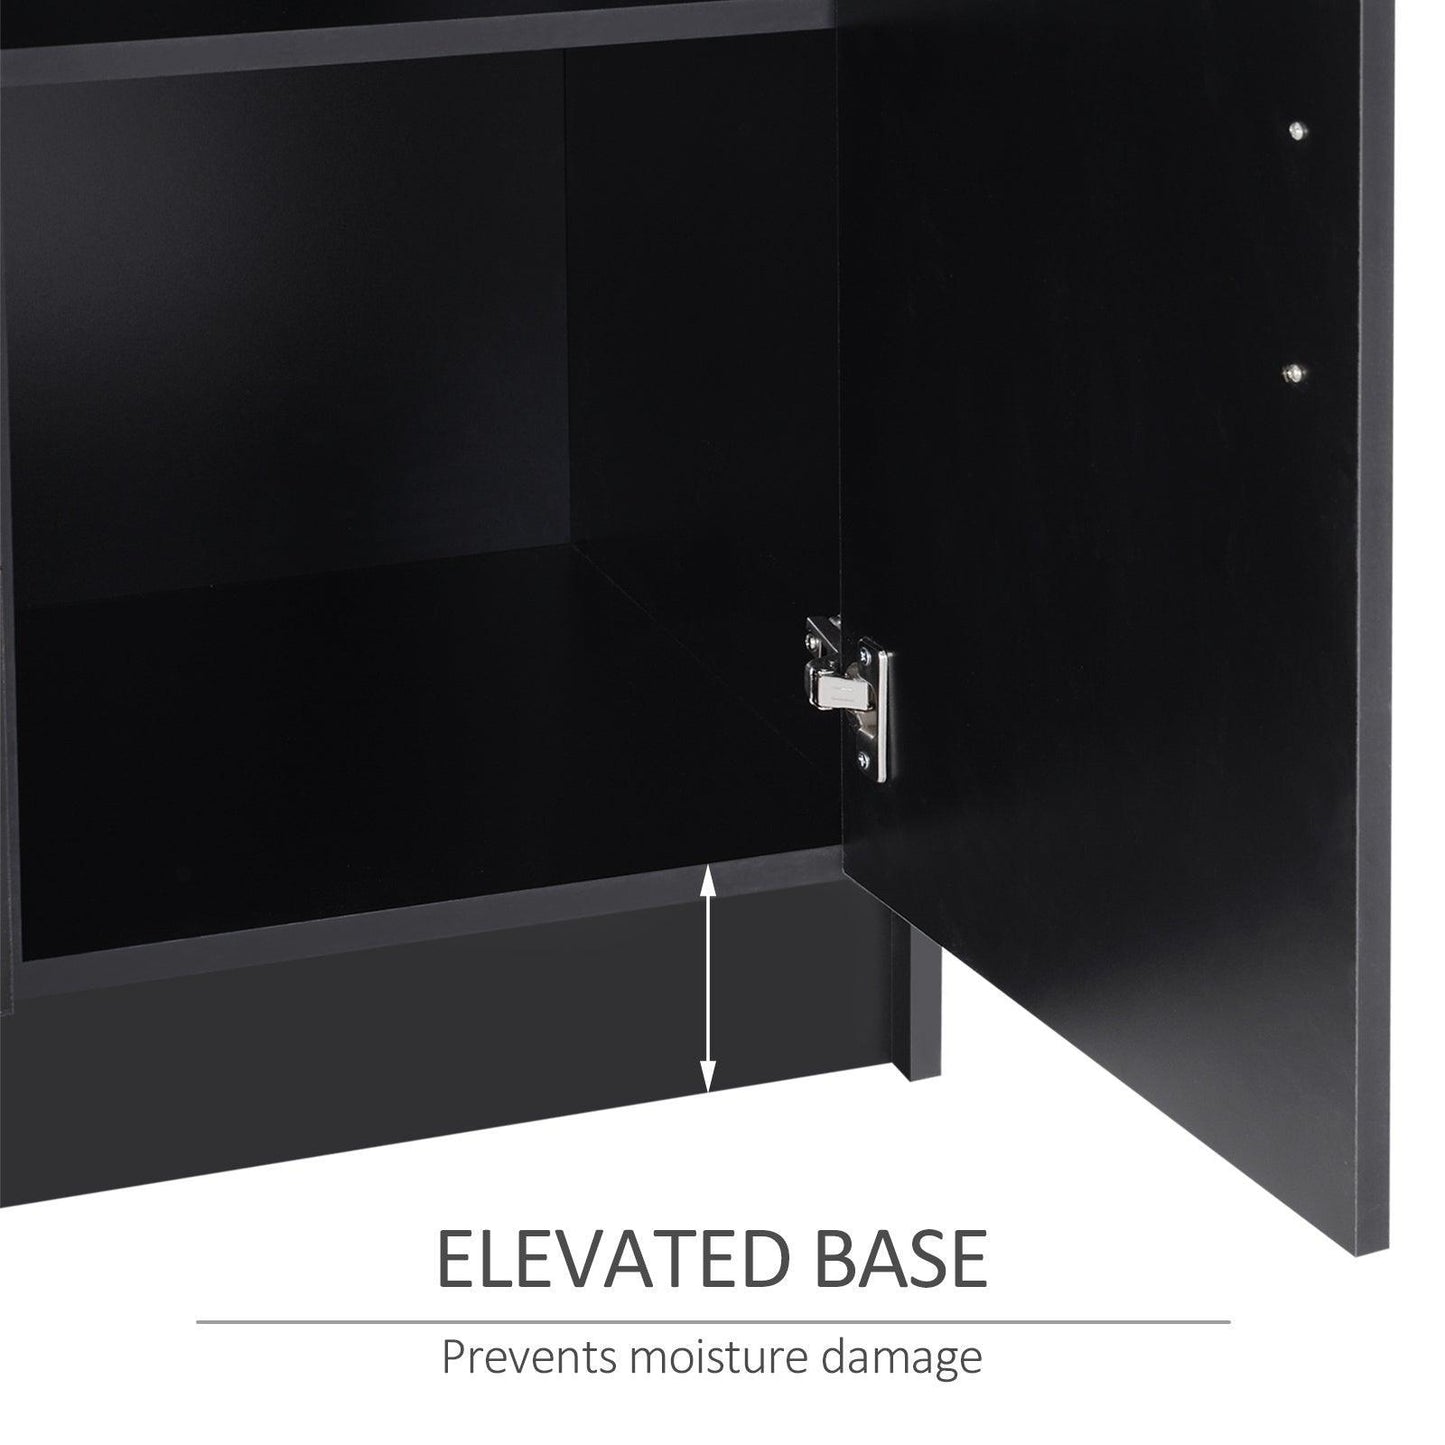 HOMCOM Black Sideboard Cabinet with Doors & Drawers - ALL4U RETAILER LTD